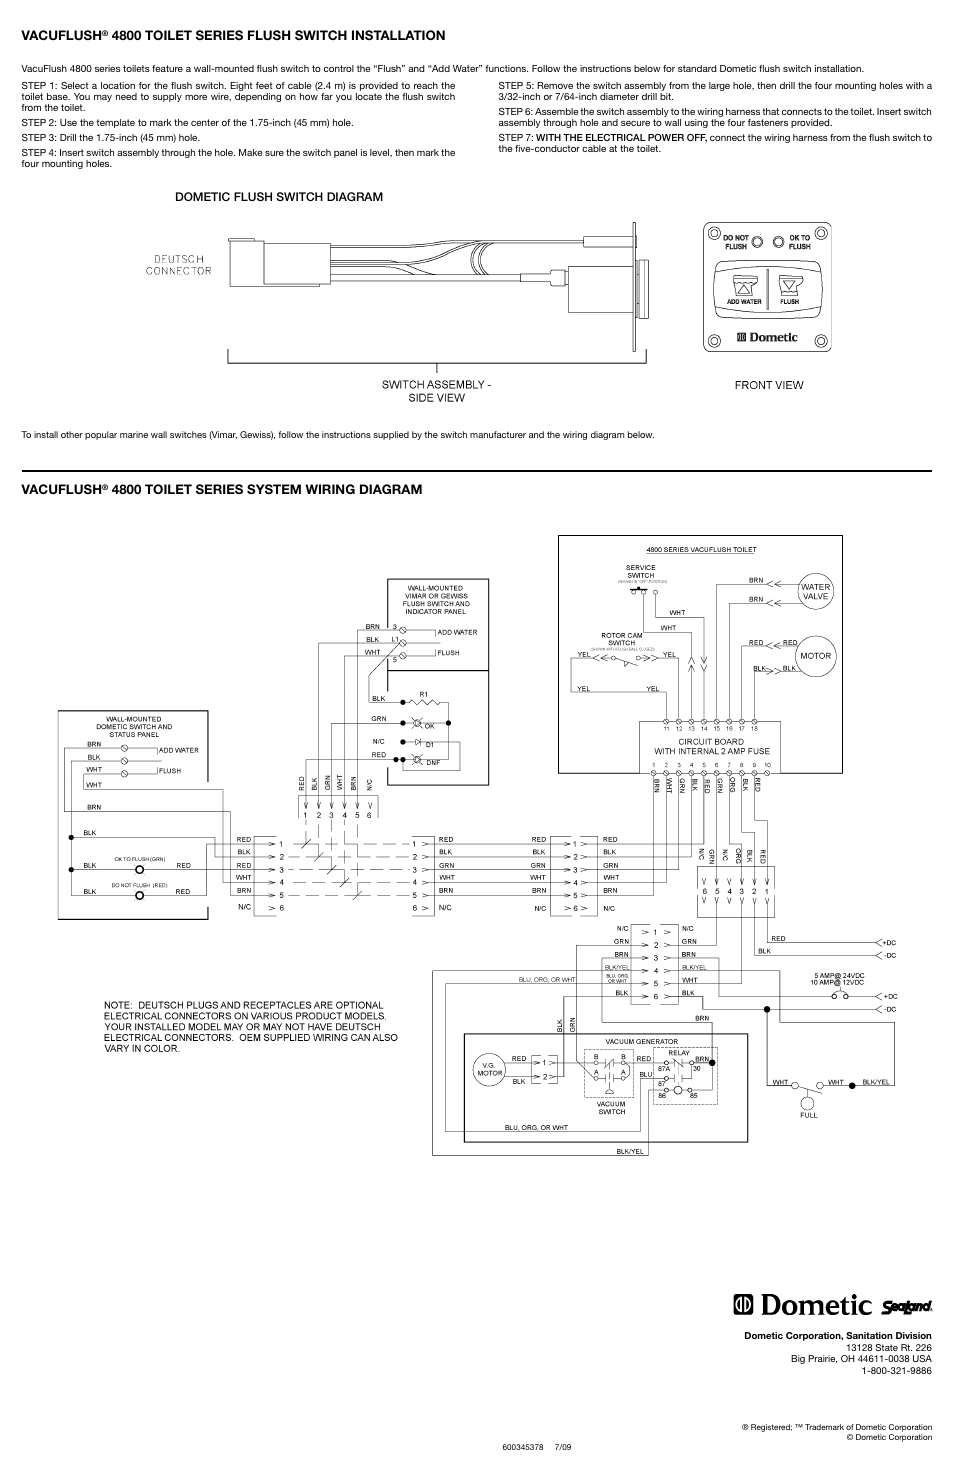 Vacuflush, 4800 toilet series system wiring diagram, 4800 toilet series